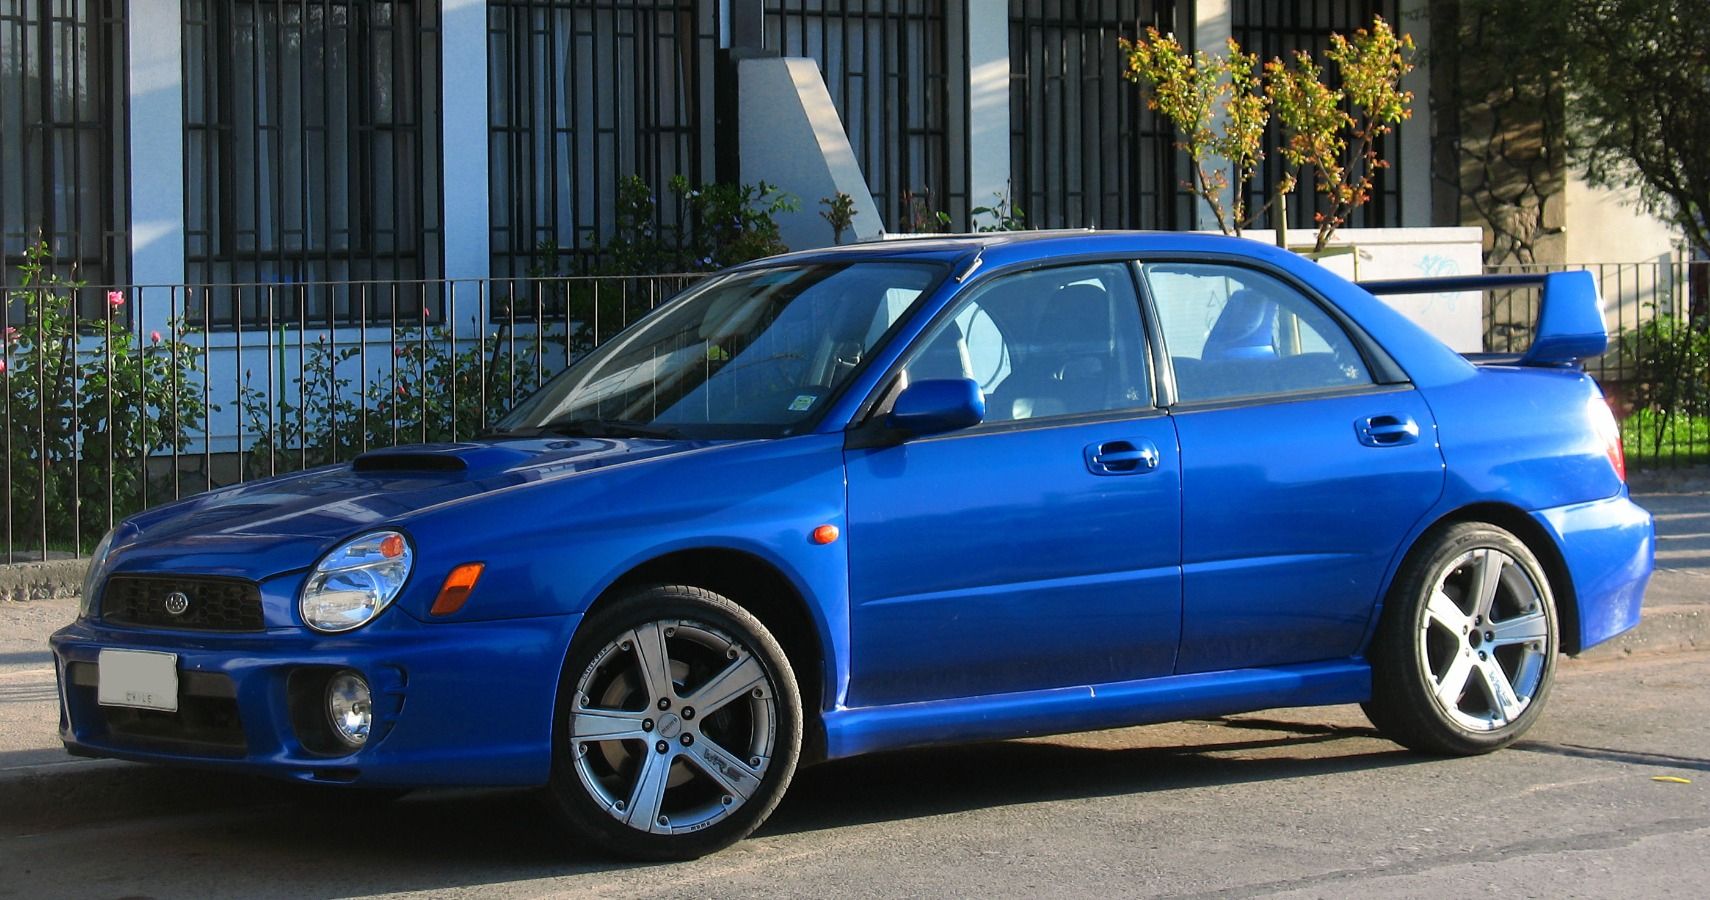 The 2002 Bugeye Subaru Impreza parked on the street.